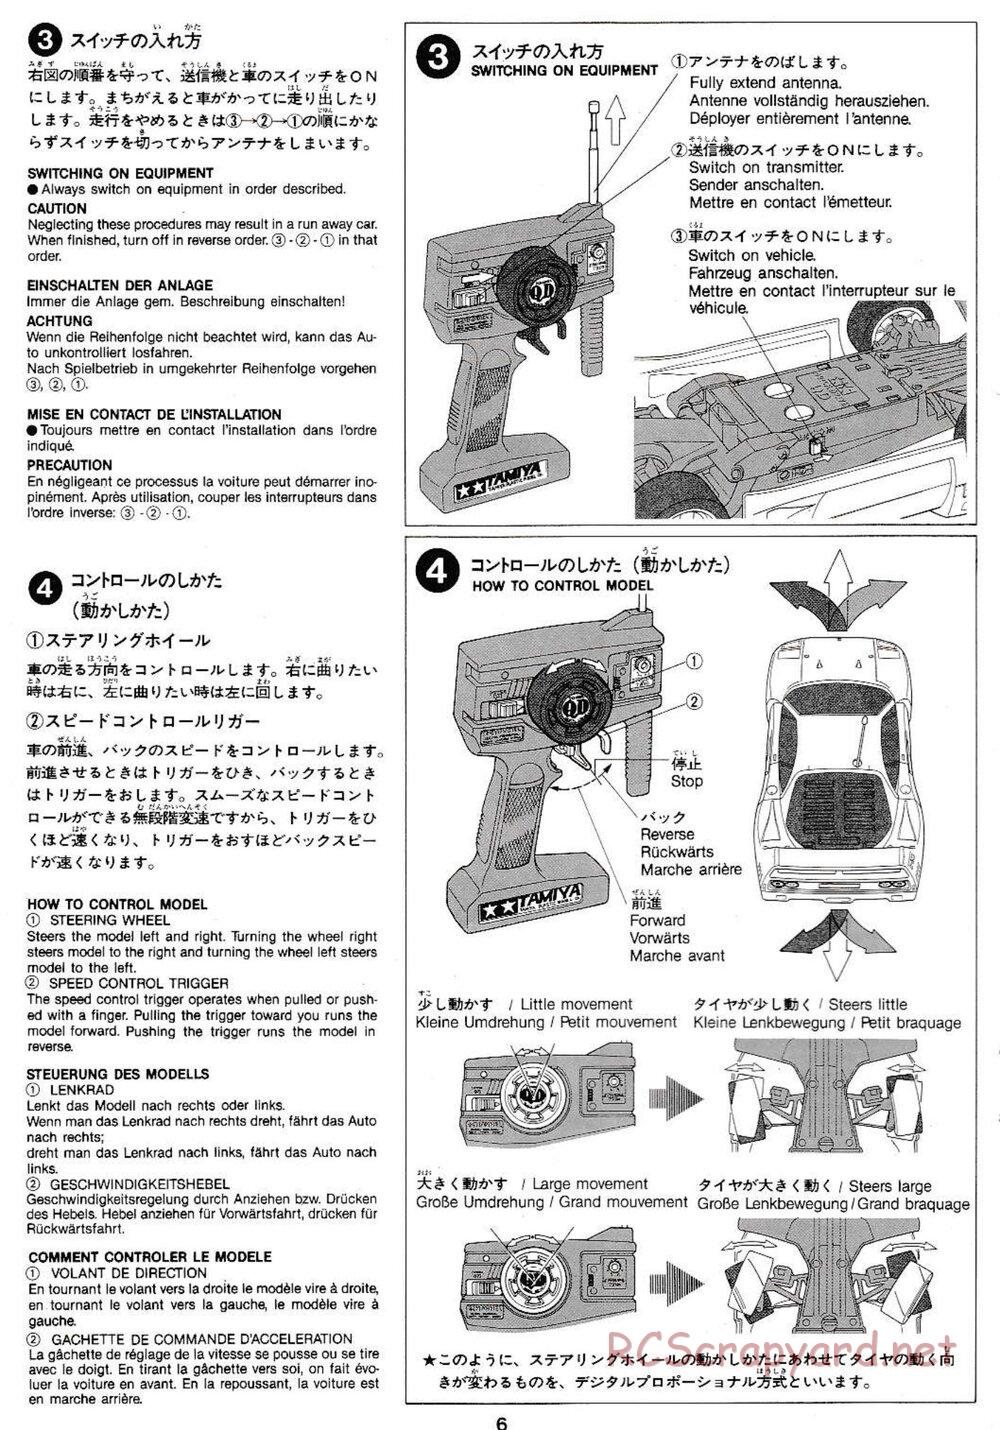 Tamiya - Ferrari F40 QD Chassis - Manual - Page 6